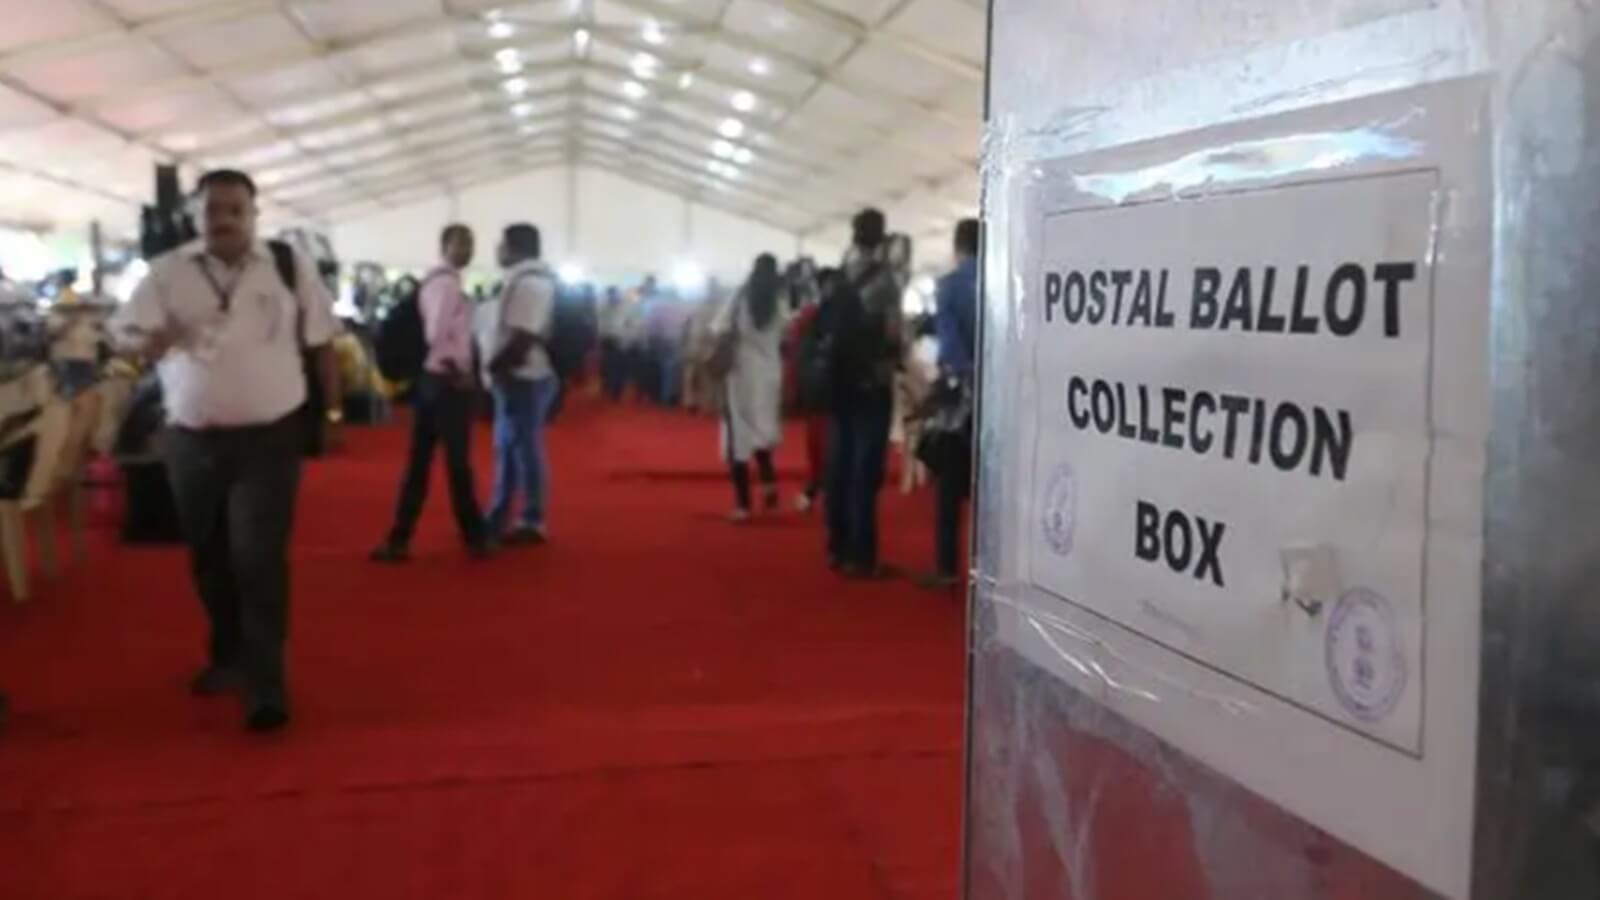 3,220 people cast votes via postal ballot